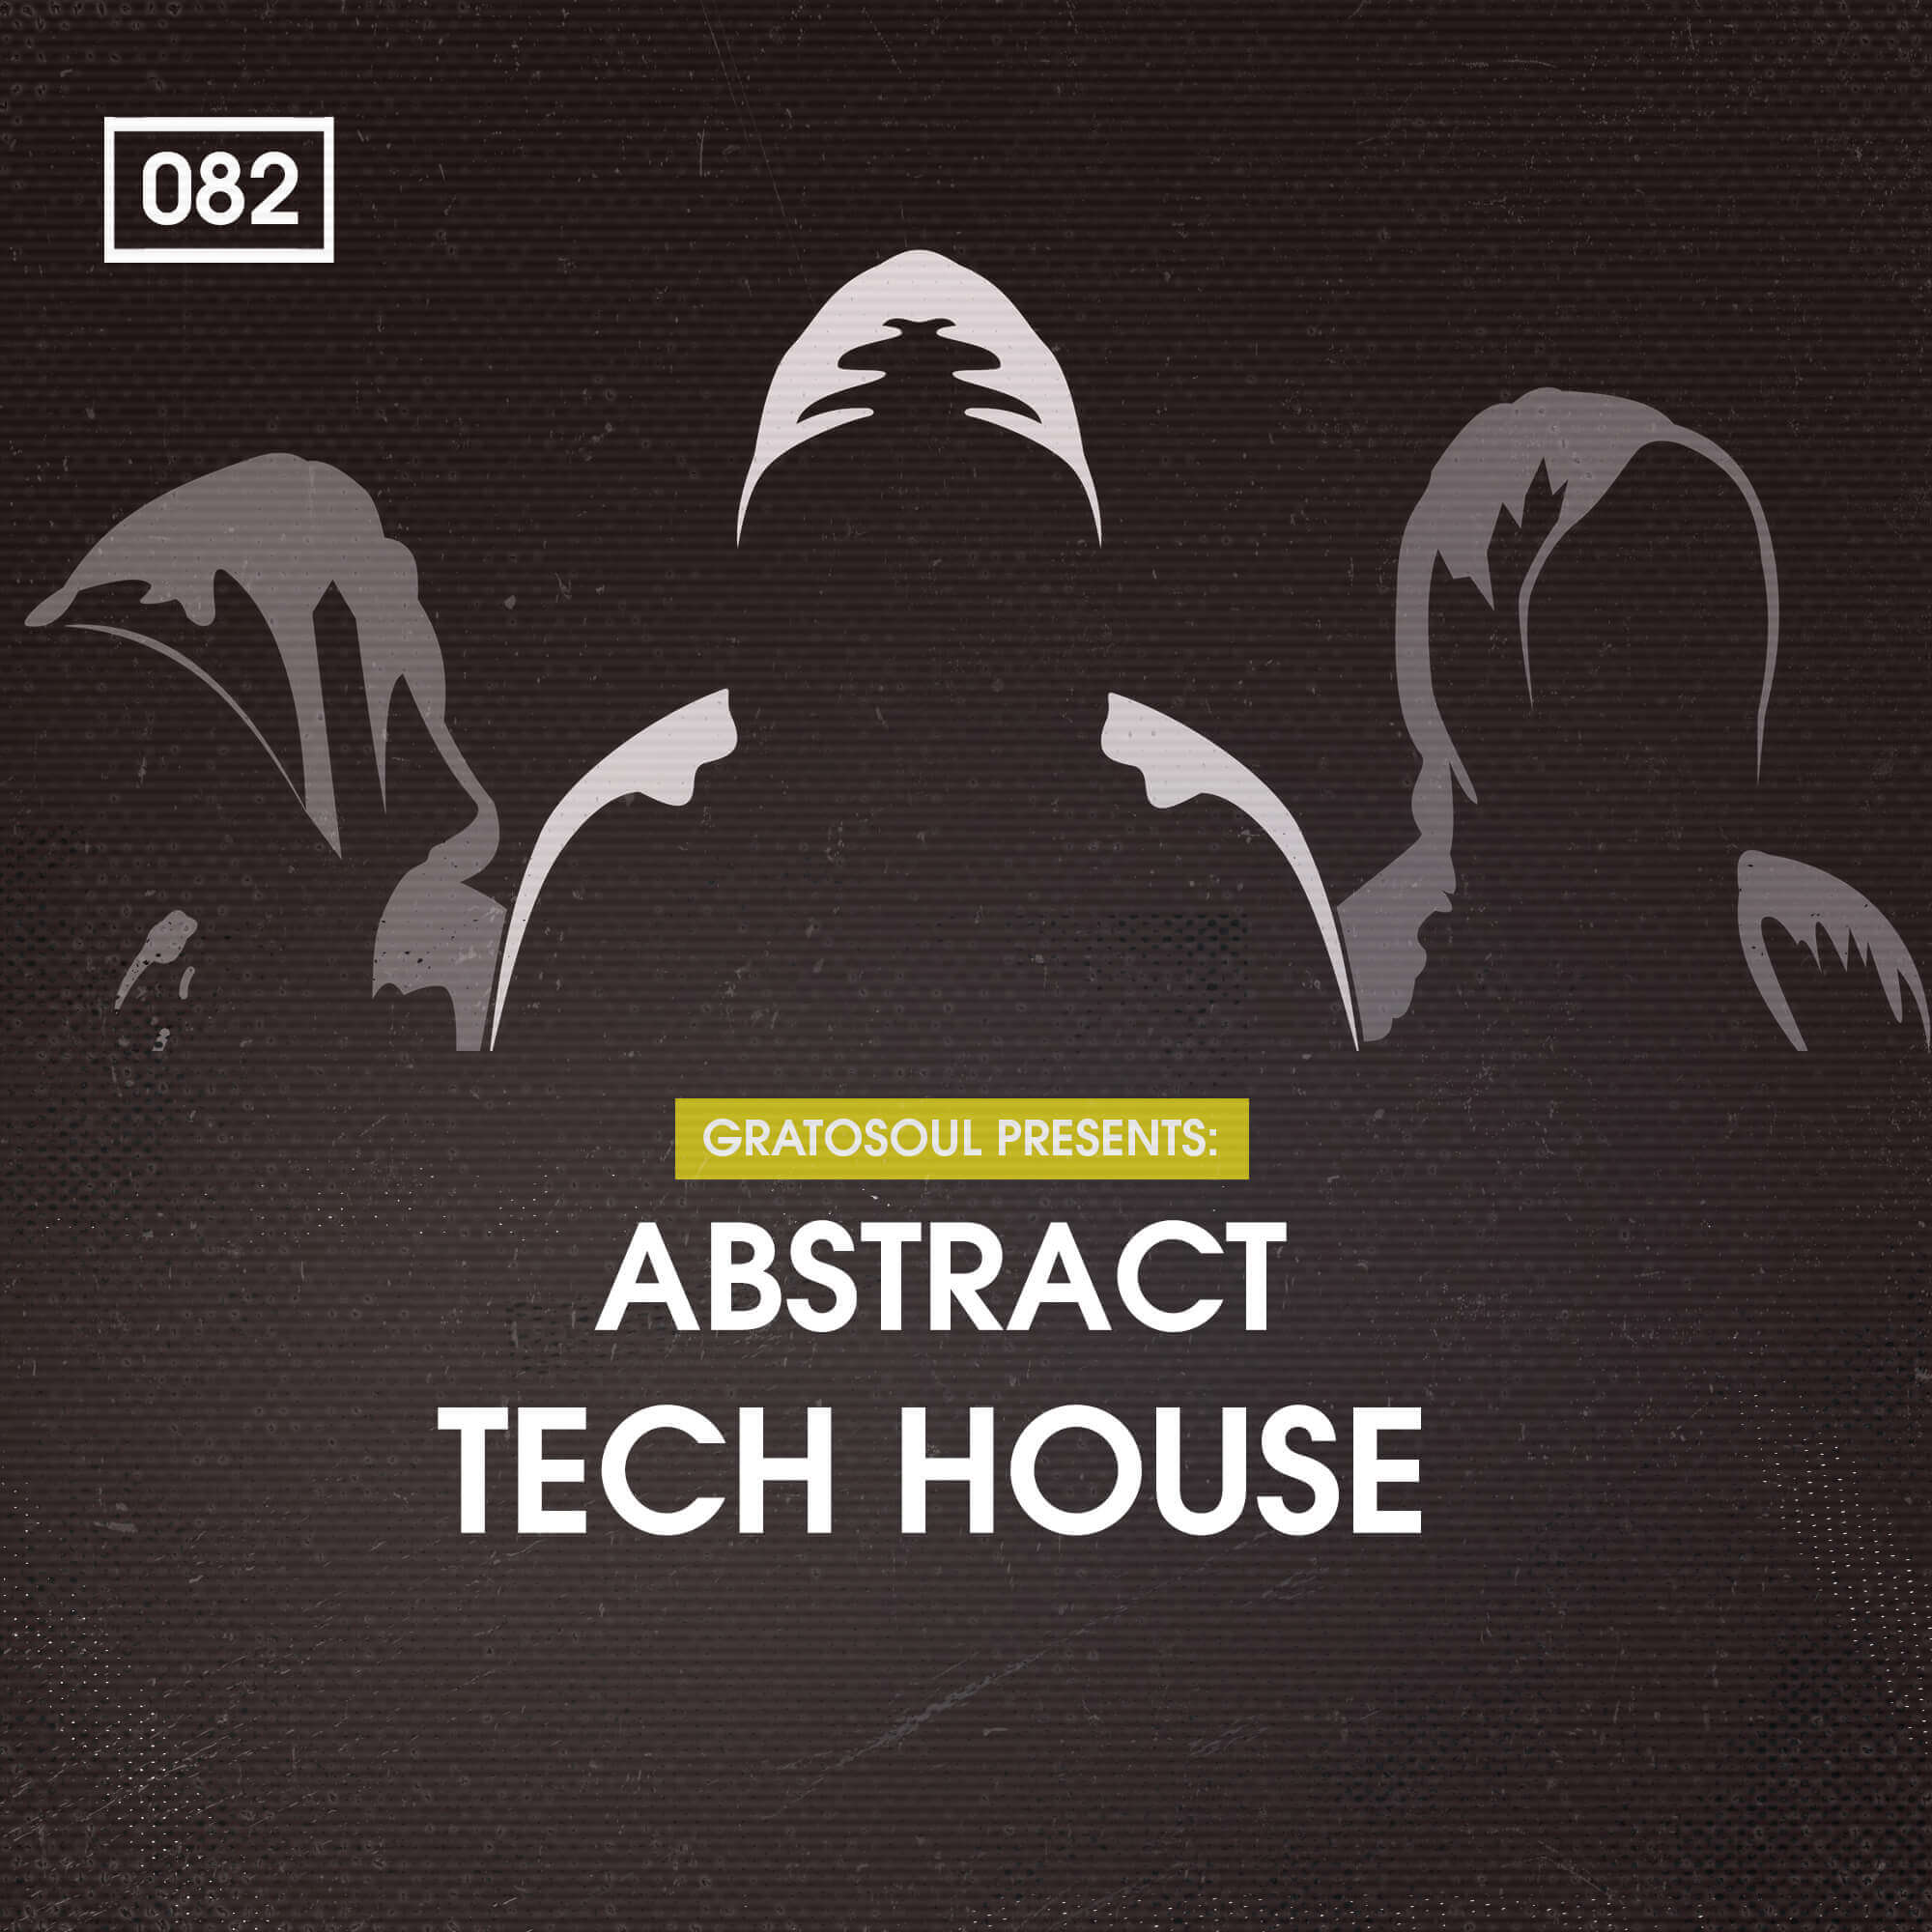 Gratosoul-Presents-Abstract-Tech-House-1-1.jpg